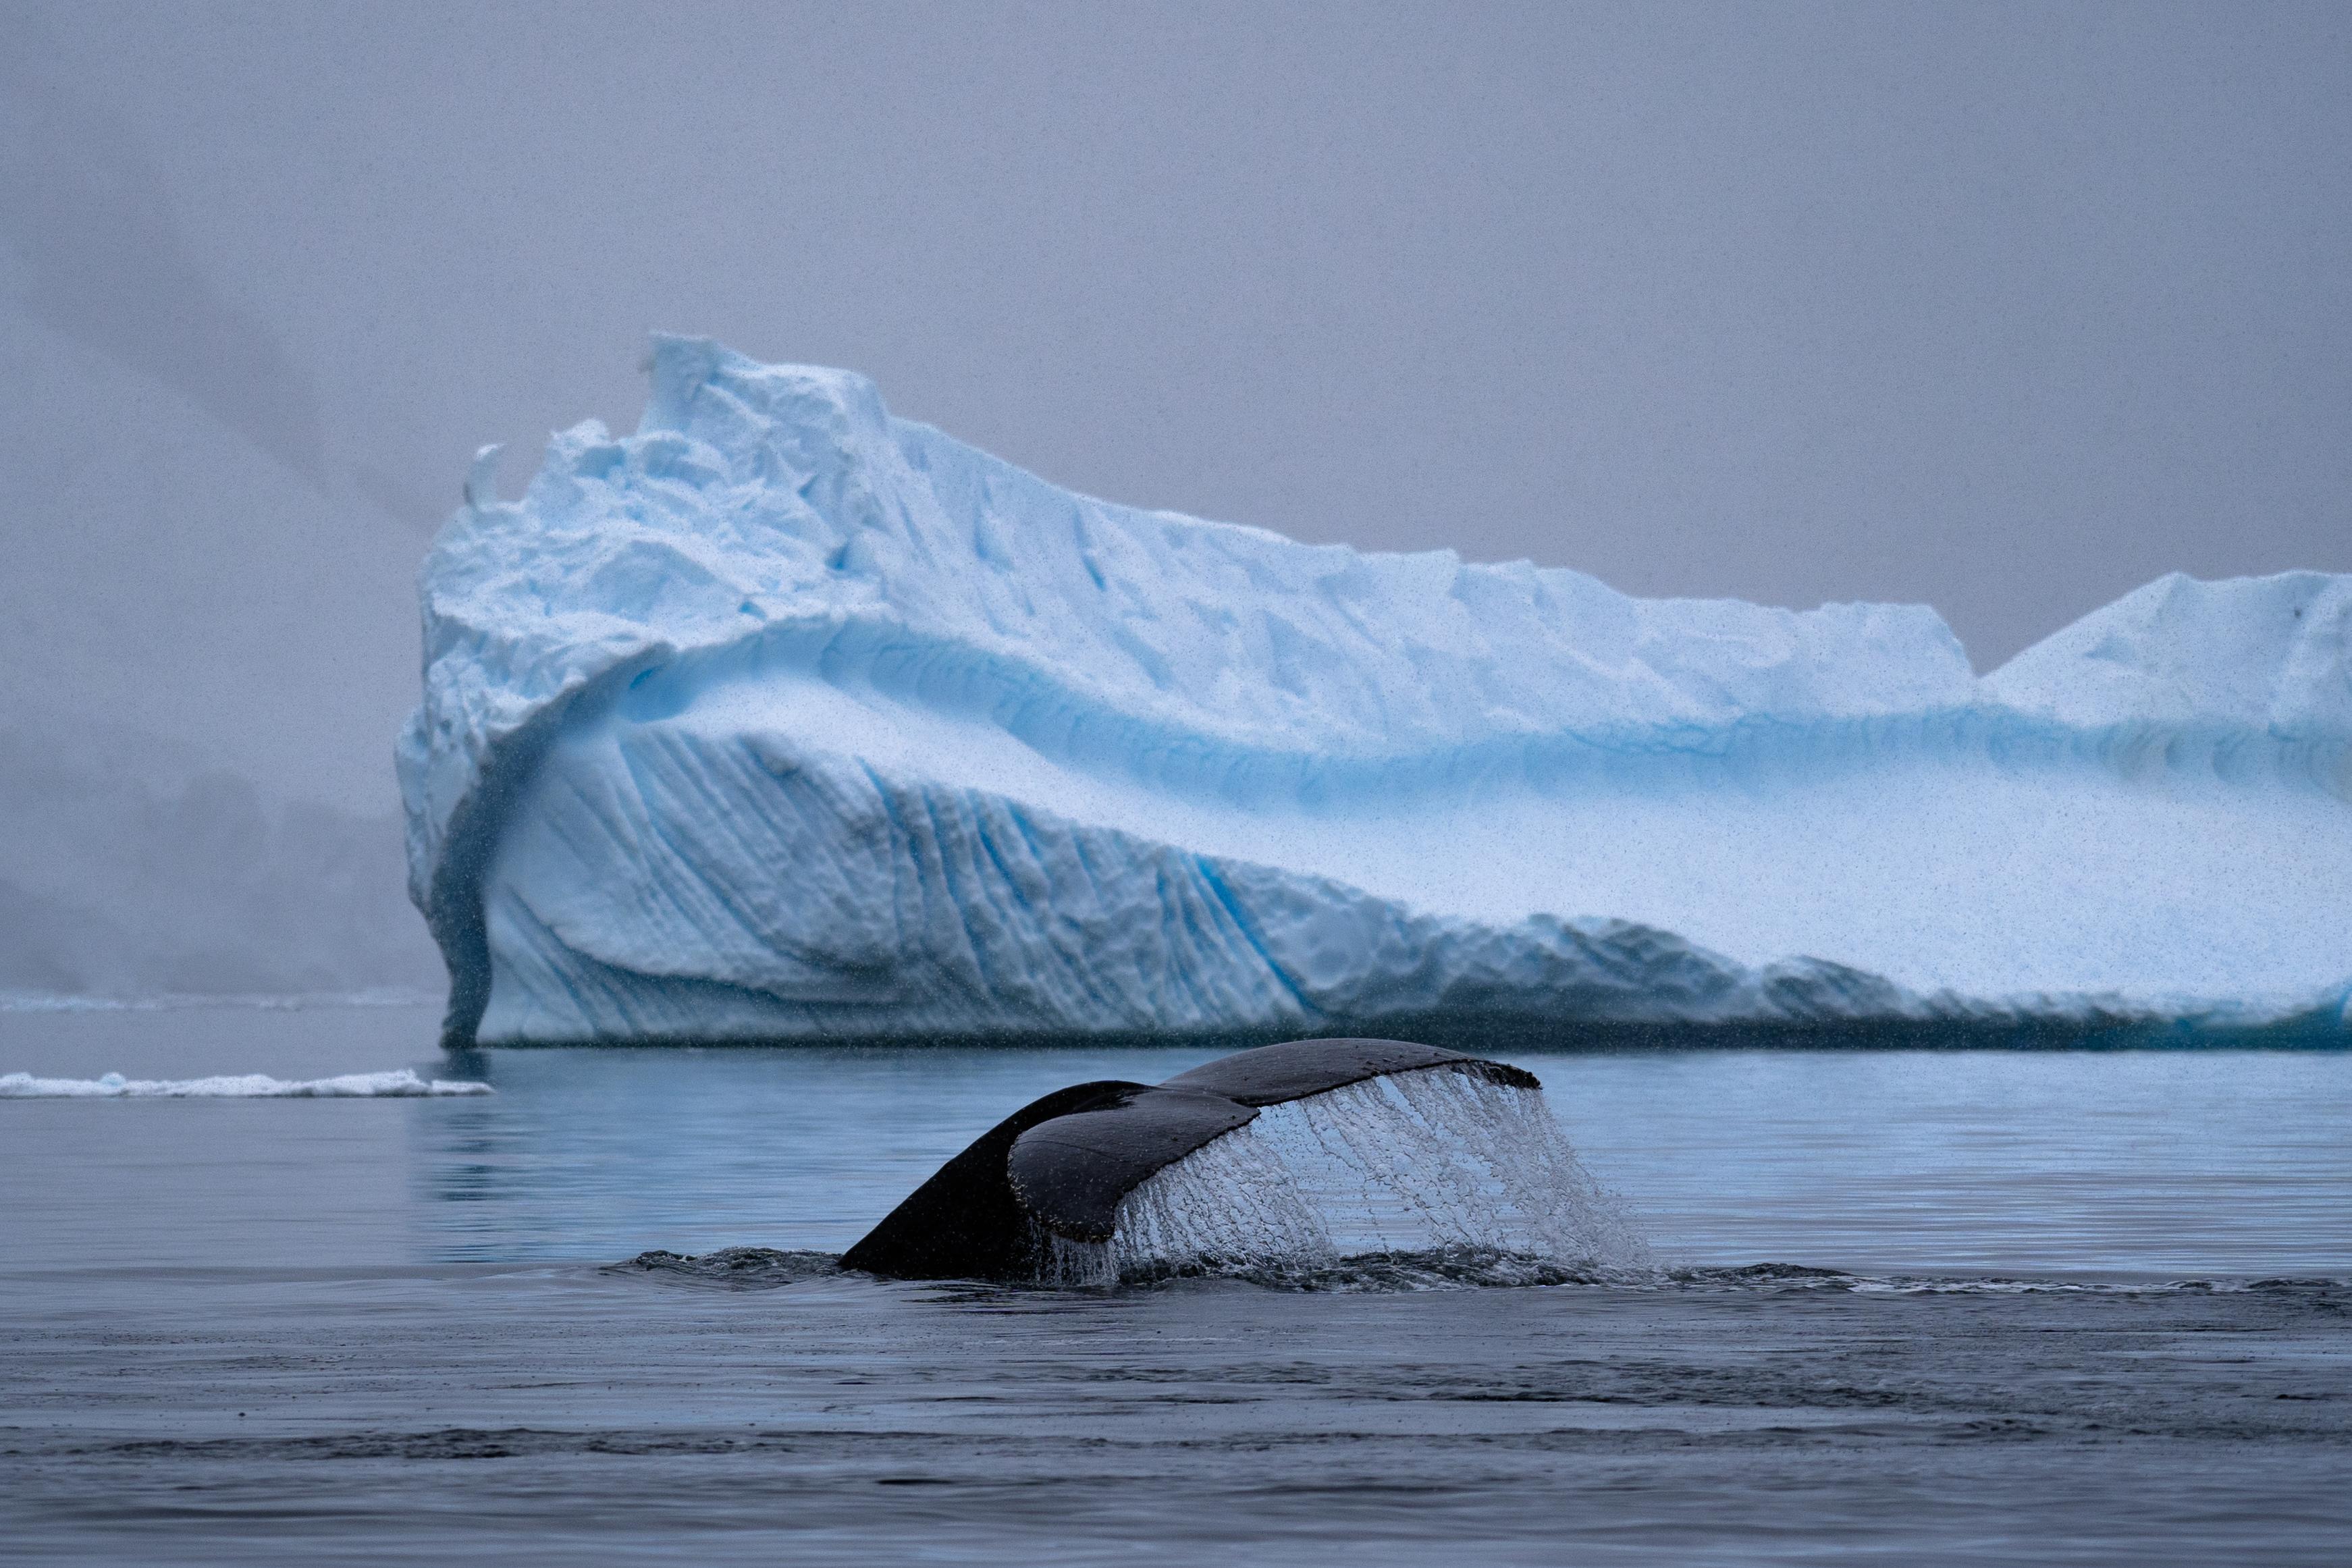 Antarctica Picture. Download Free Image